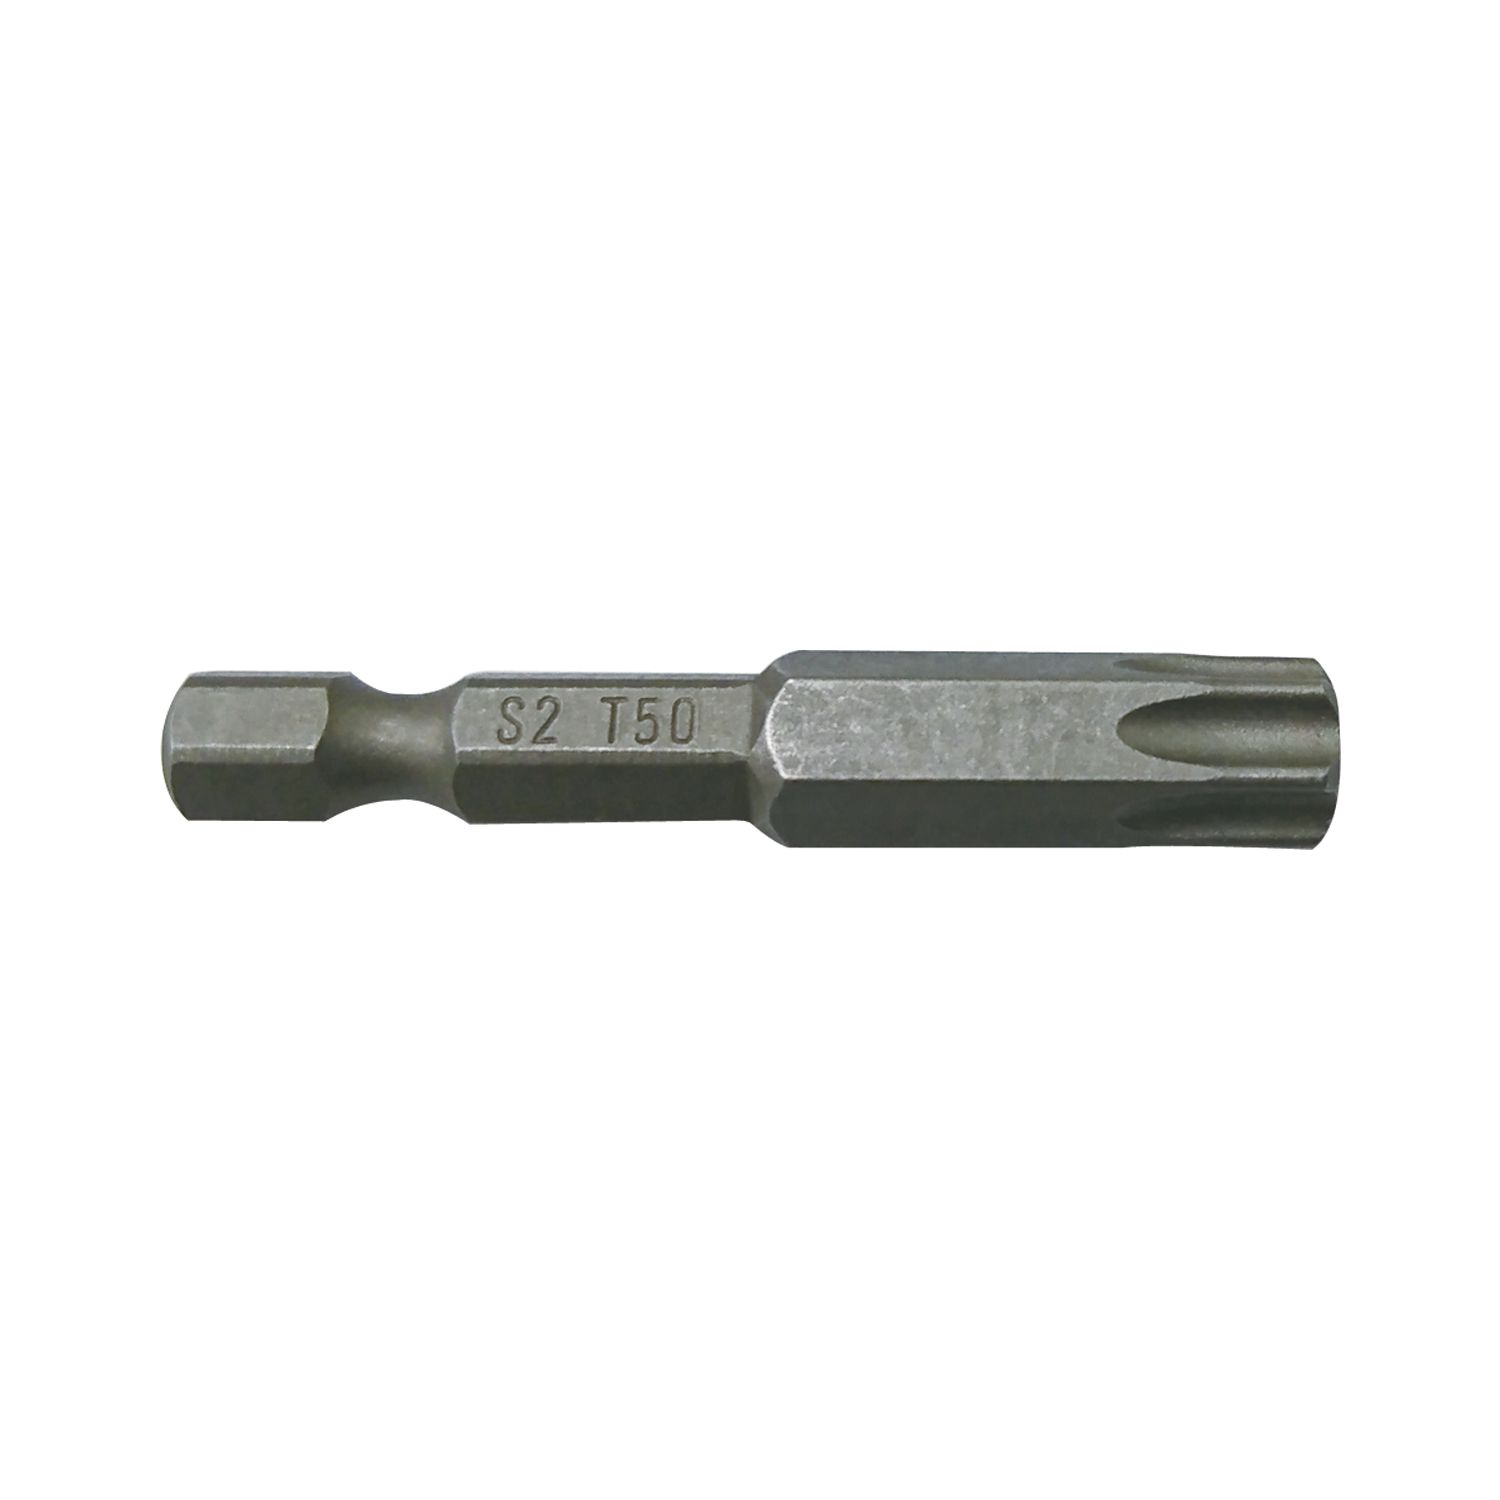 Sechskant-Bit, 50 mm/1,96 Zoll, Kugelkopf aus legiertem Stahl